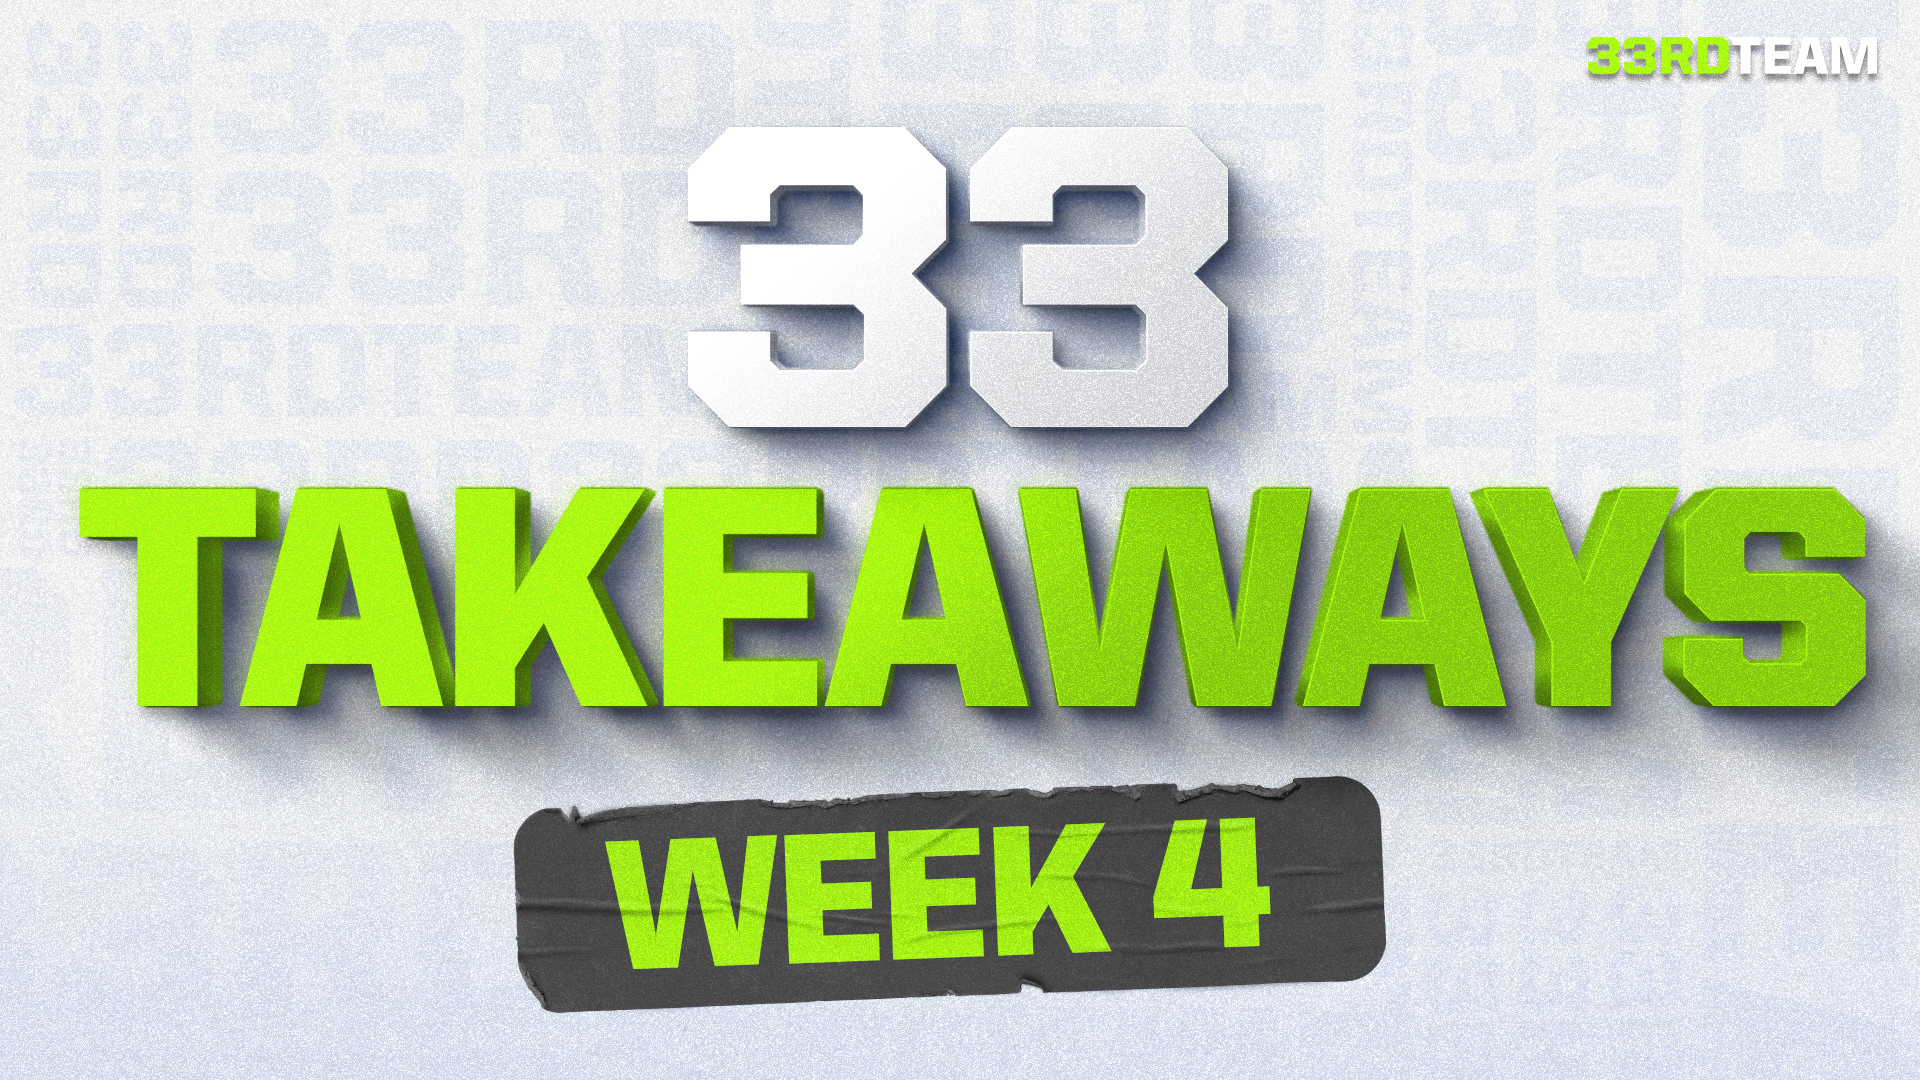 What We Learned: 33 Expert Takeaways From Week 4